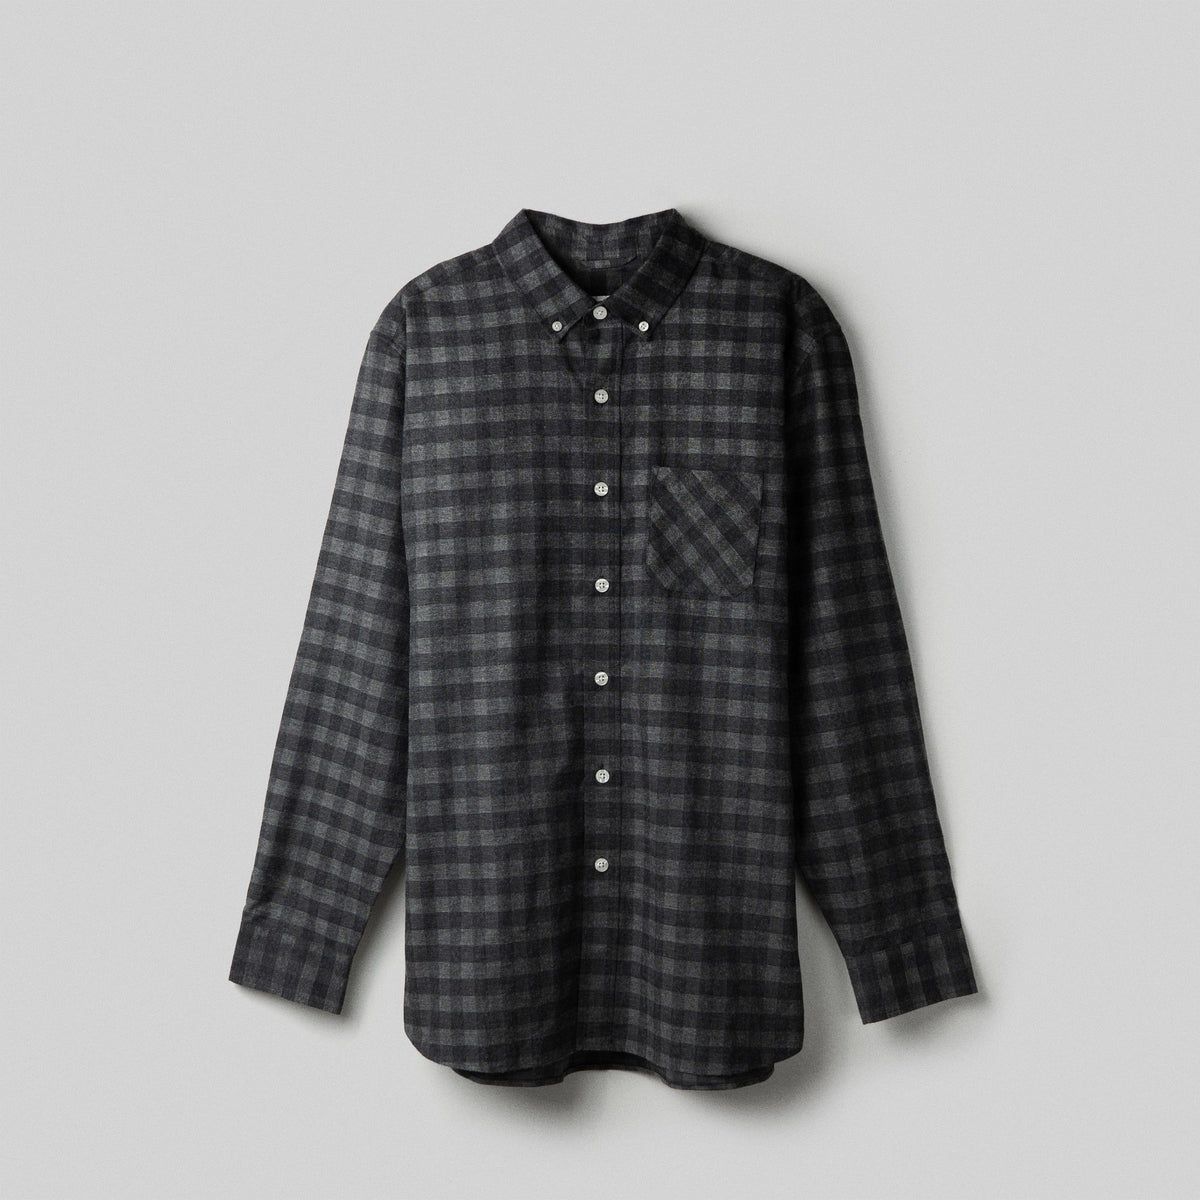 FRAHM Jacket In Stock S / Grey Check Classic Cotton Merino Shirt